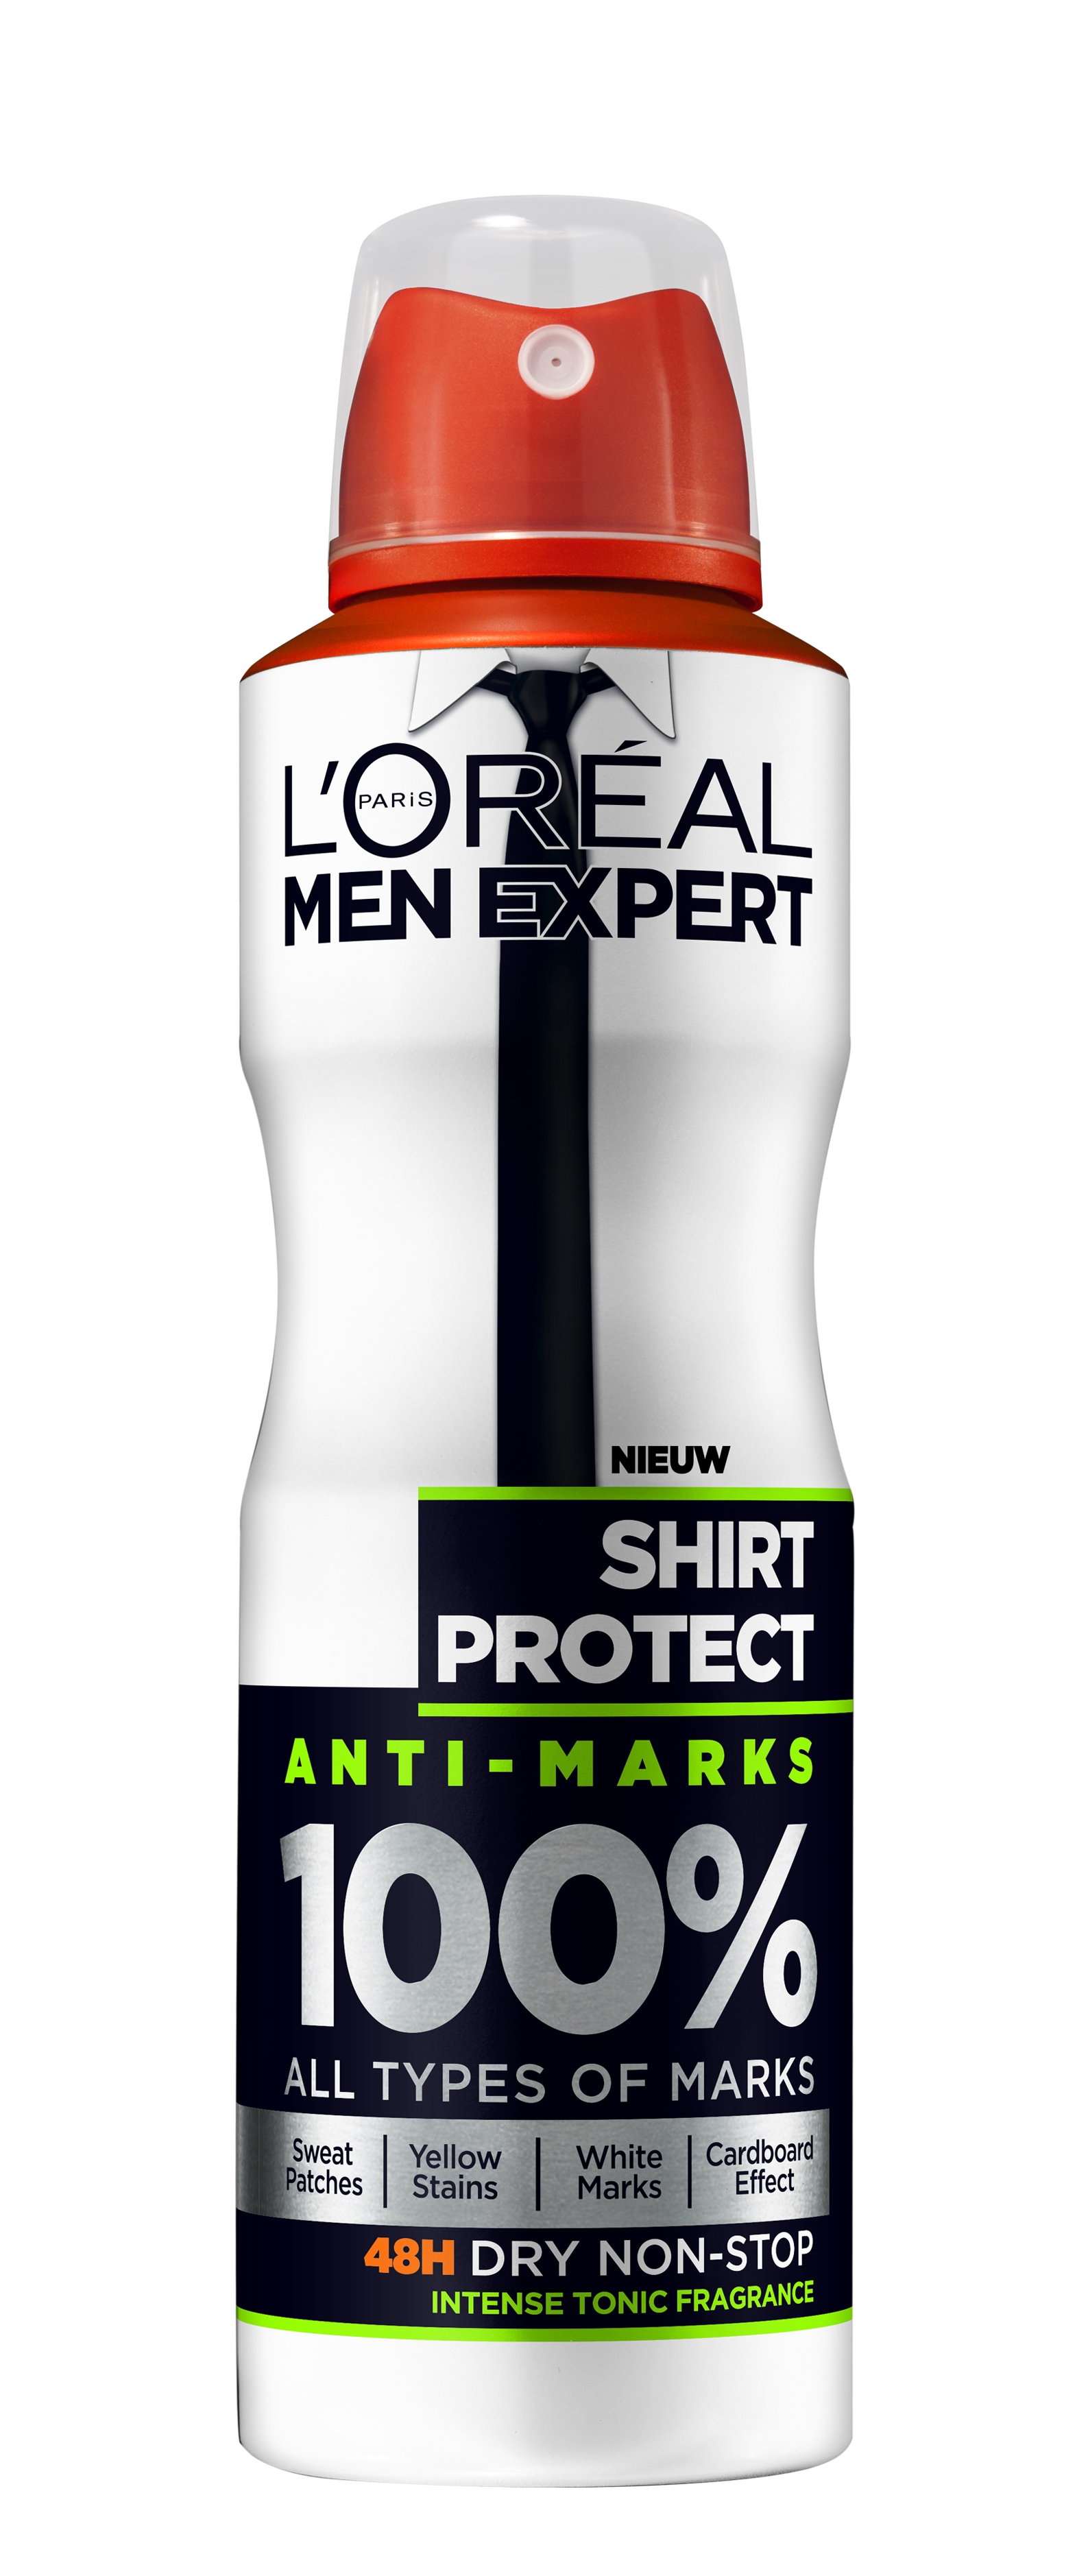 L'Oréal Men Expert Deodorant Men Expert Shirt Protect - 150ml - Deodorant Spray